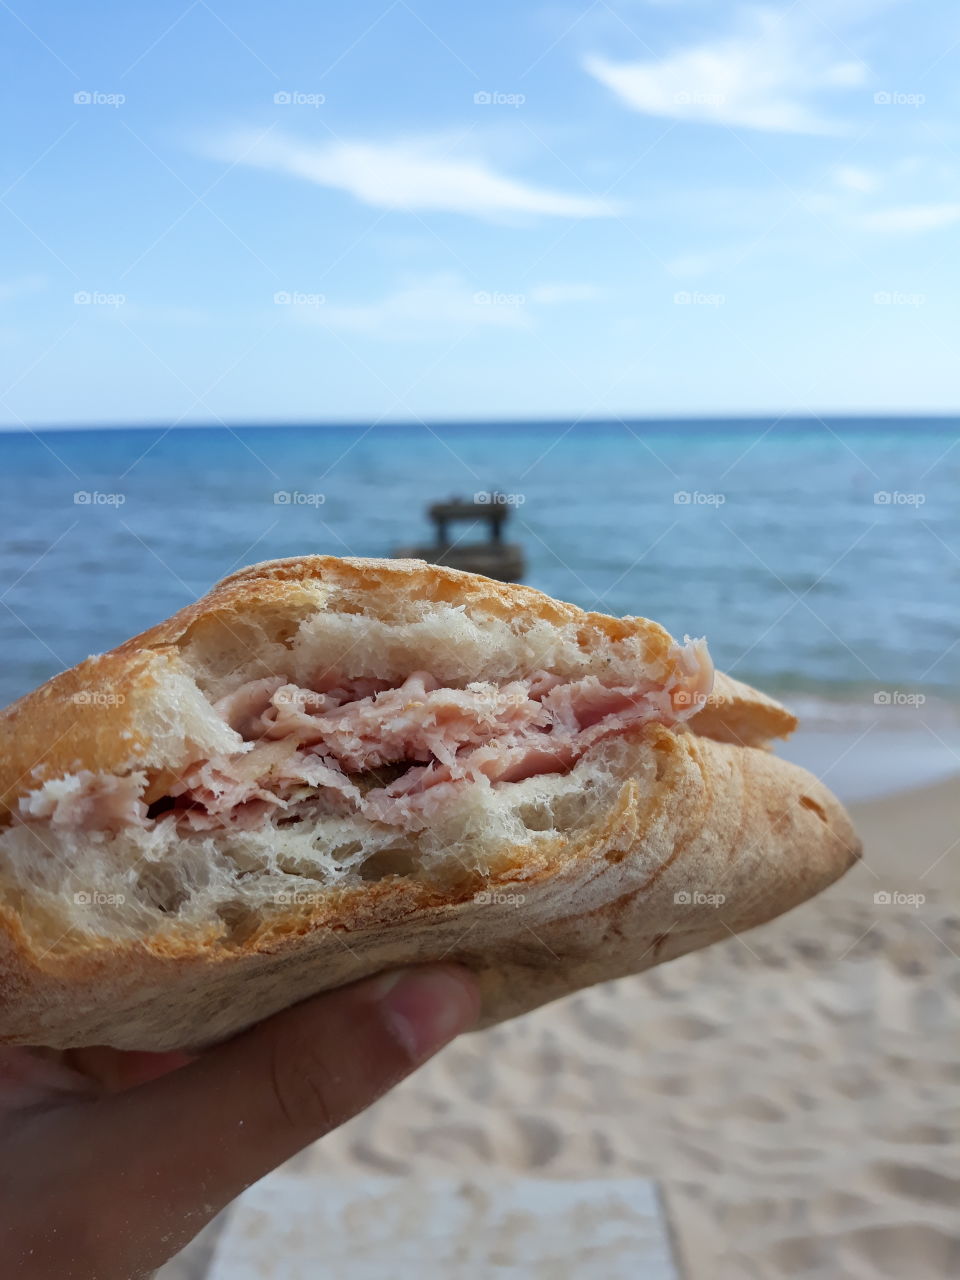 A Magic sandwich on the beach